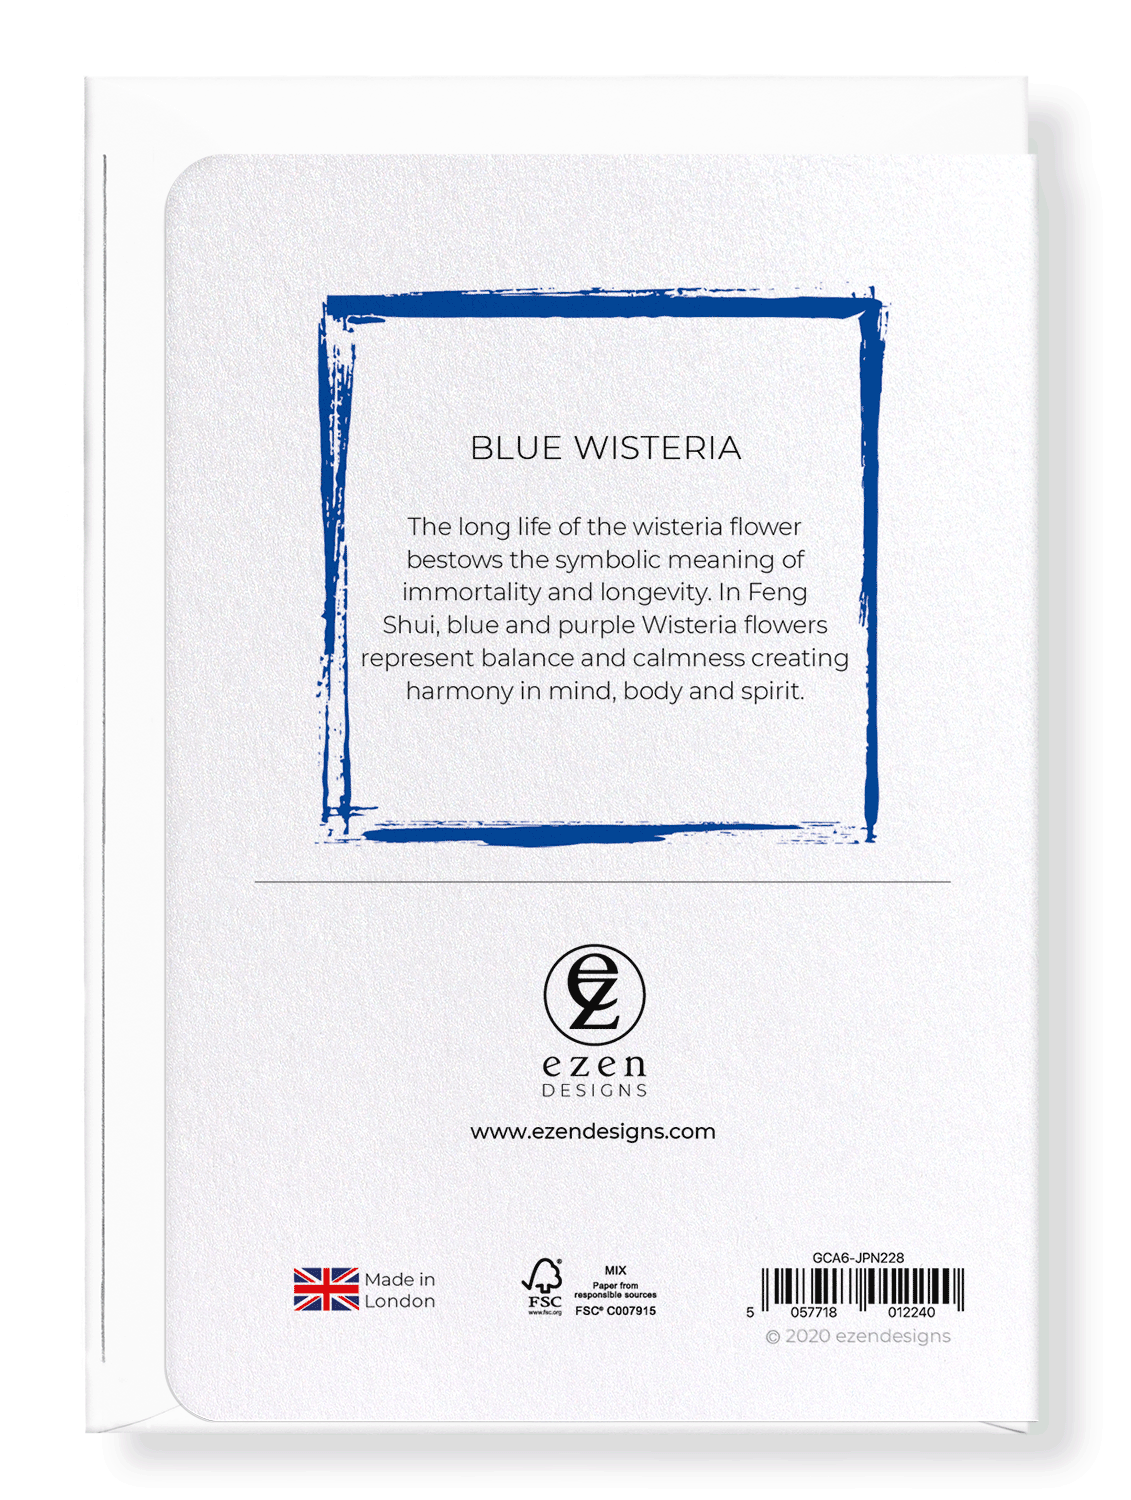 Ezen Designs - Blue wisteria - Greeting Card - Back